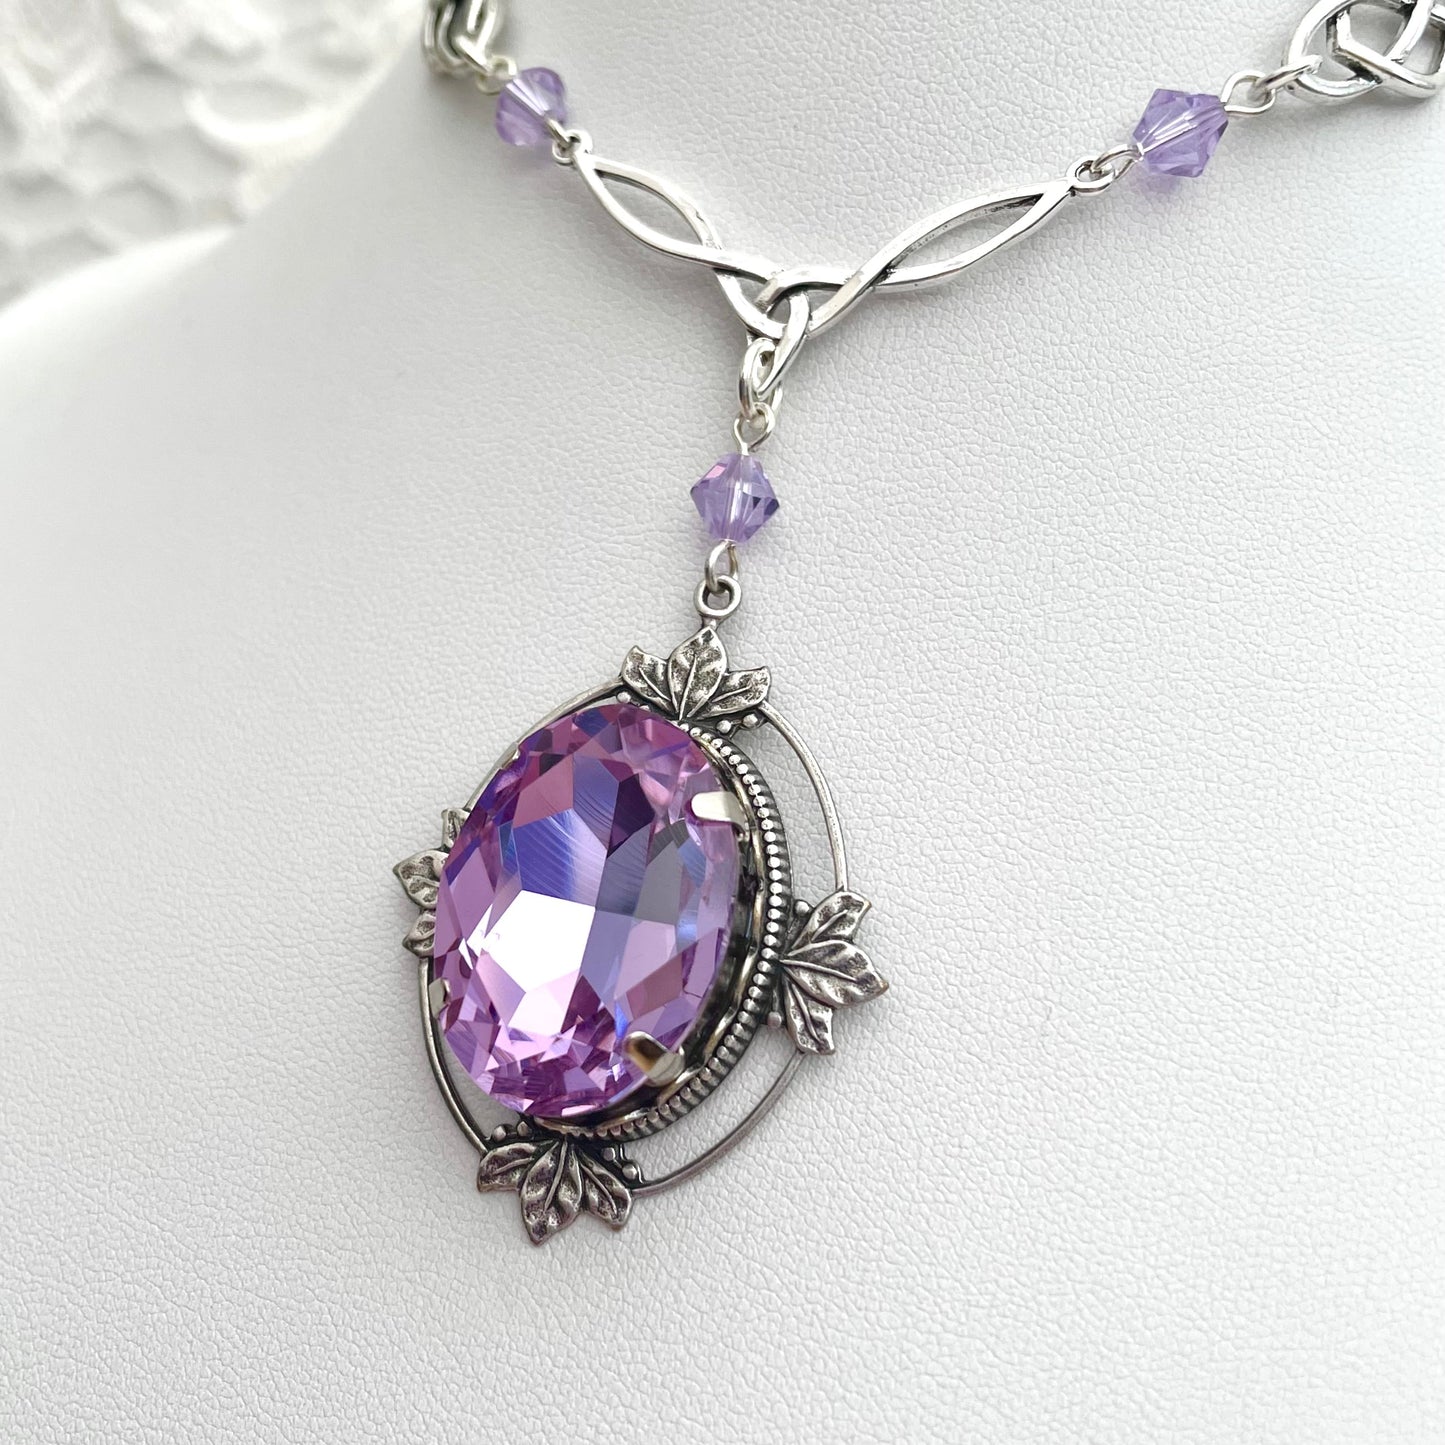 'Arinien' Necklace (Unicorn Crystal - Lilac)